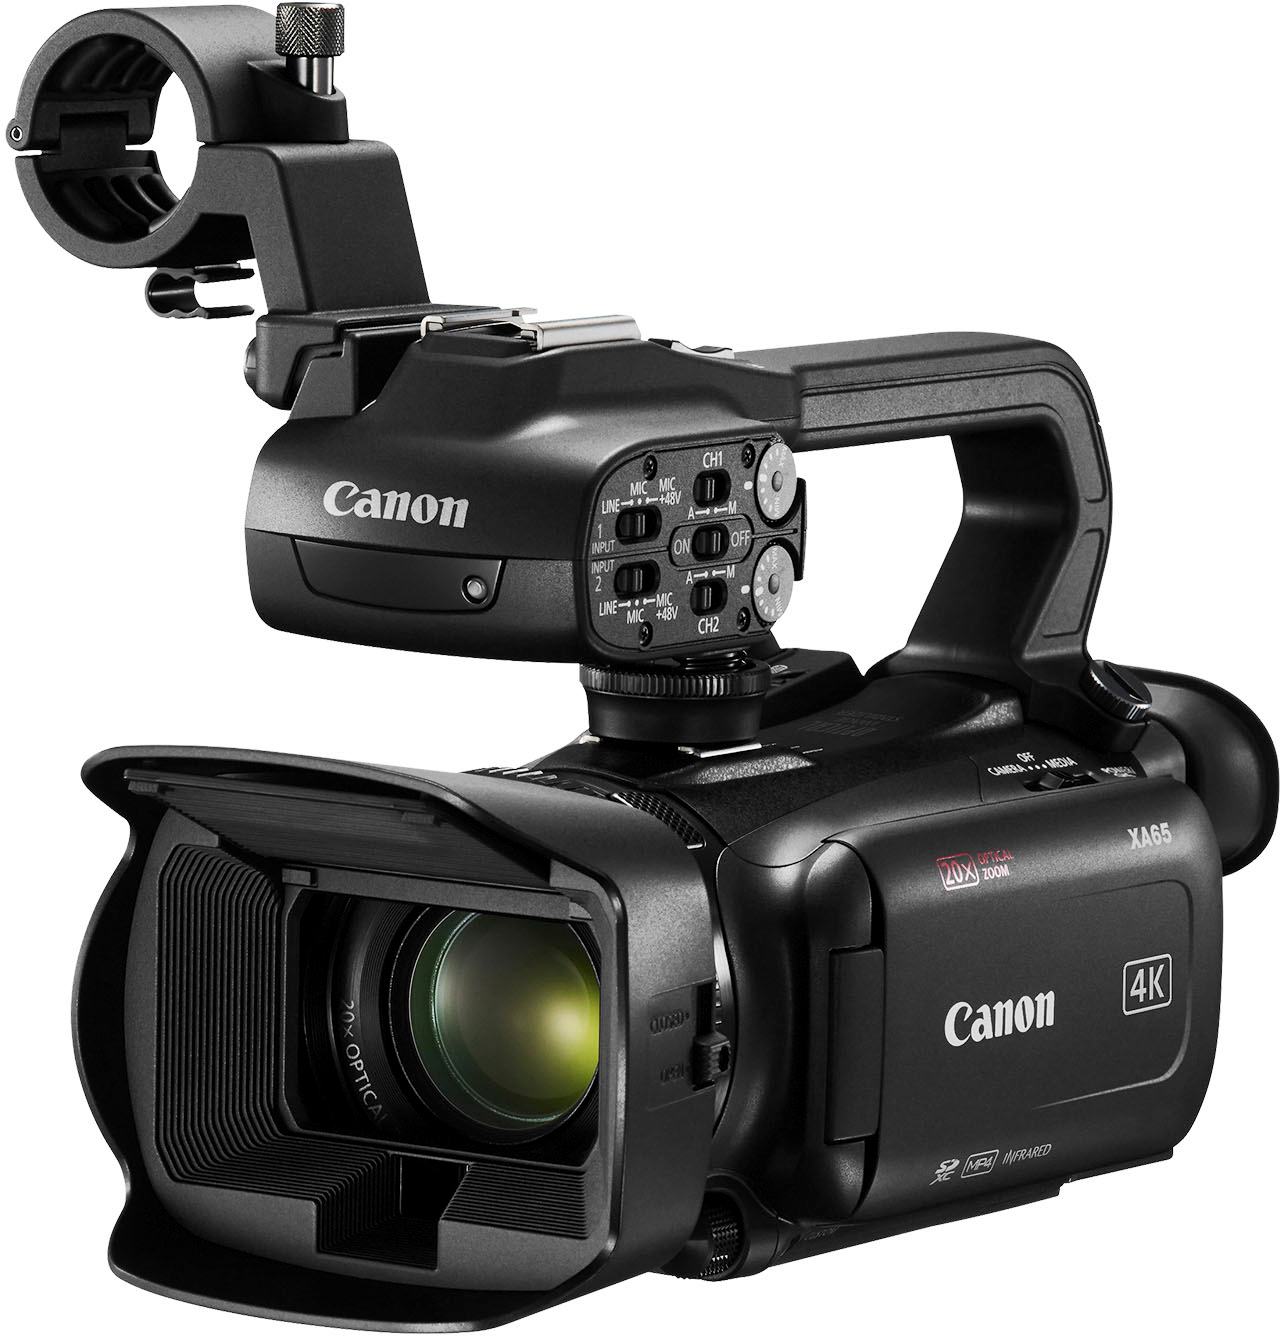 Angle View: Canon - XA65 Professional Camcorder - Black